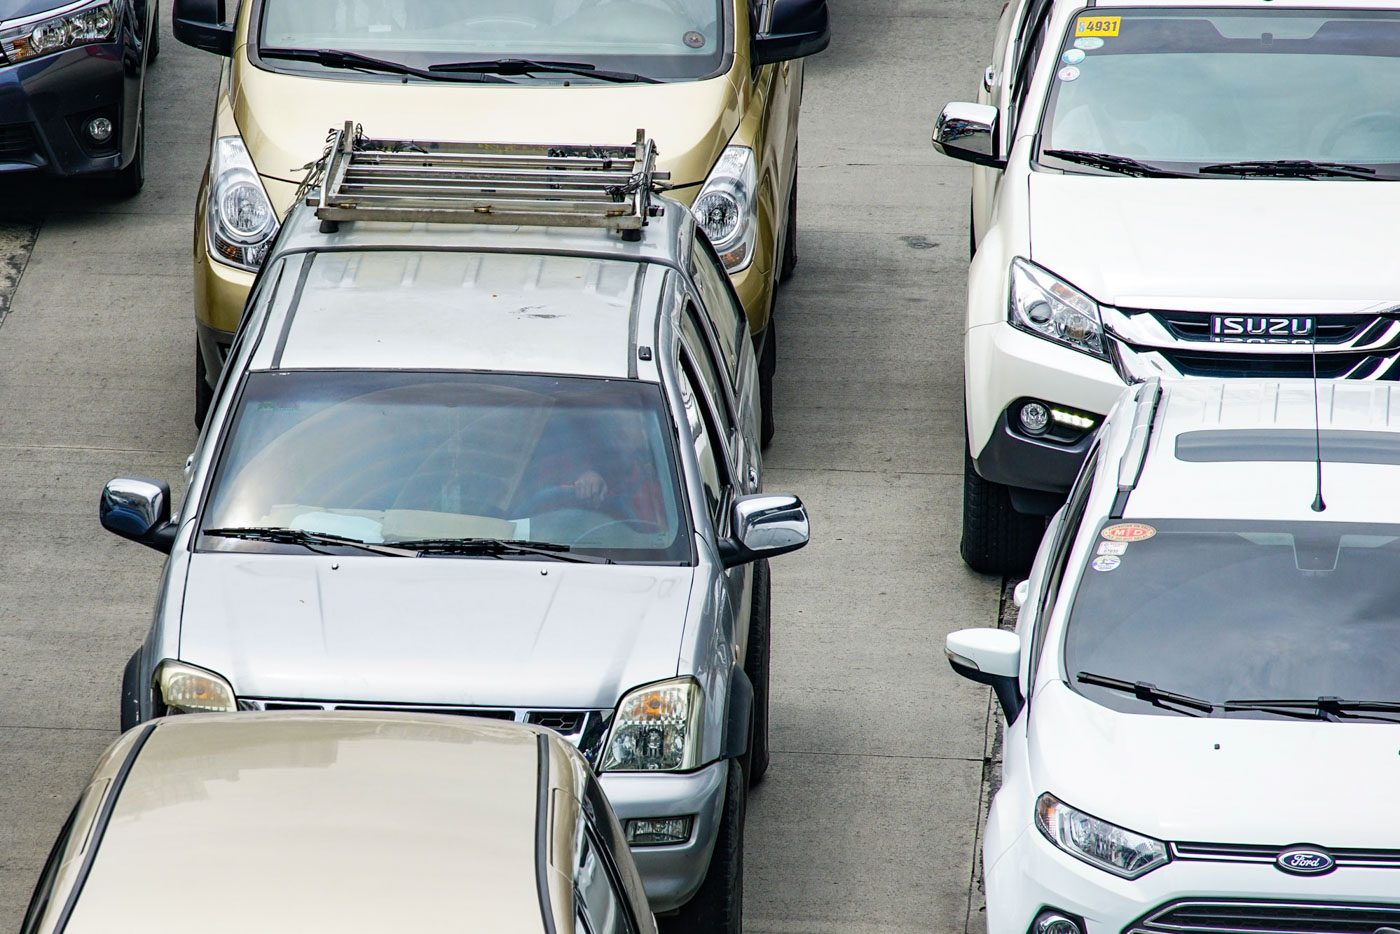 Lawmaker seeks ‘win-win’ rate in regulating parking fees